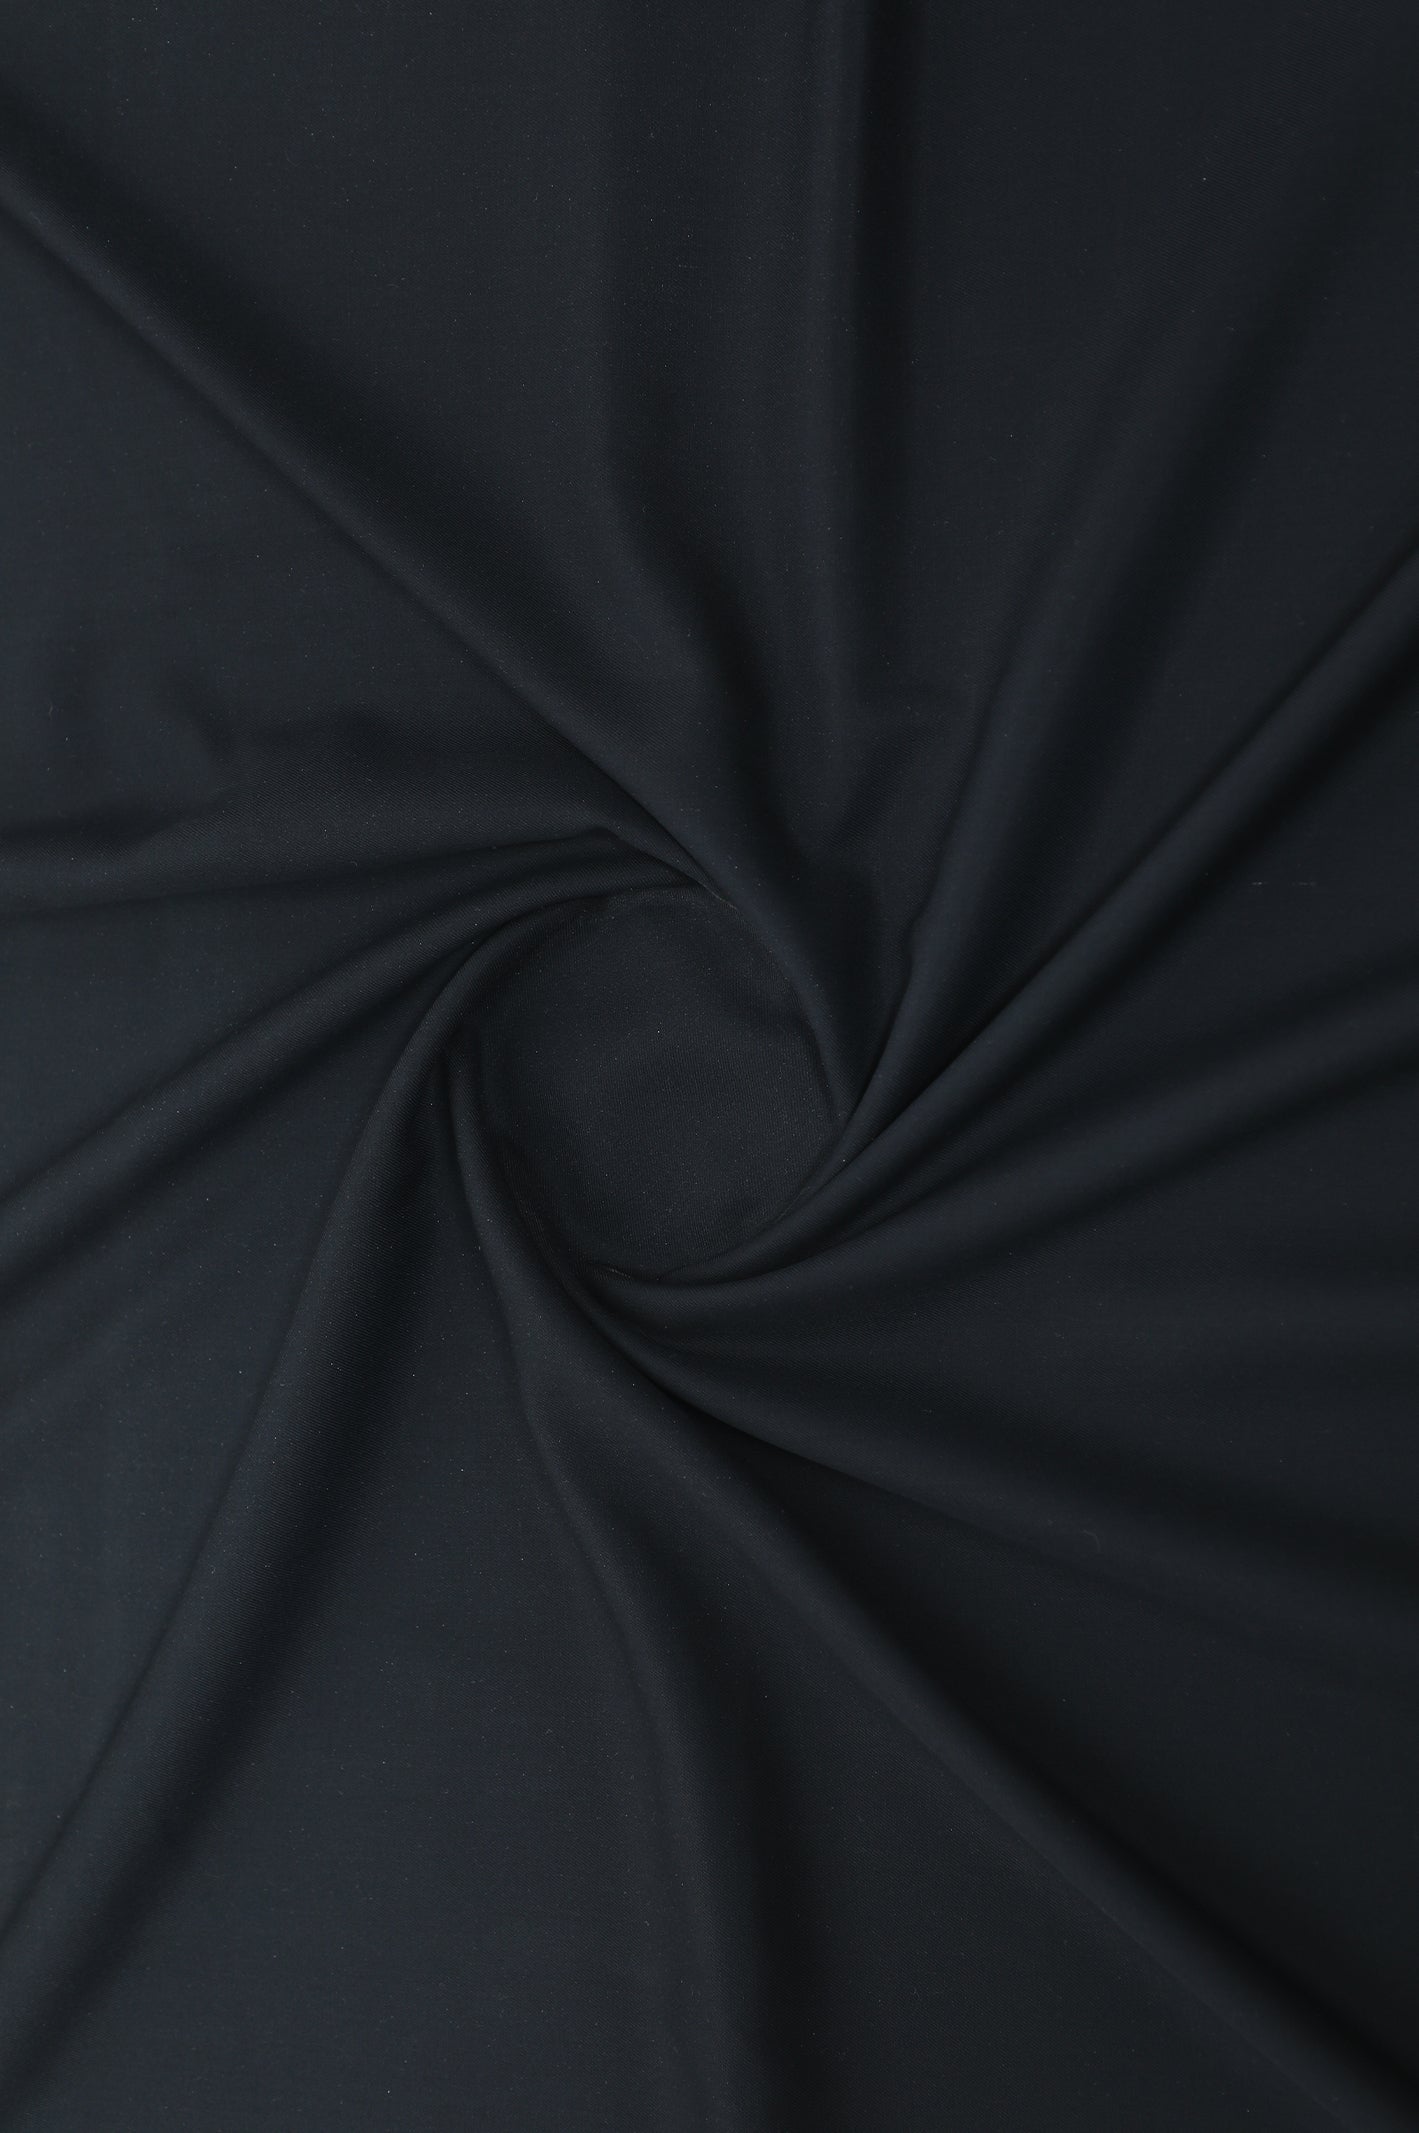 Unstitched Fabric for Men SKU: US0214-BLACK - Diners